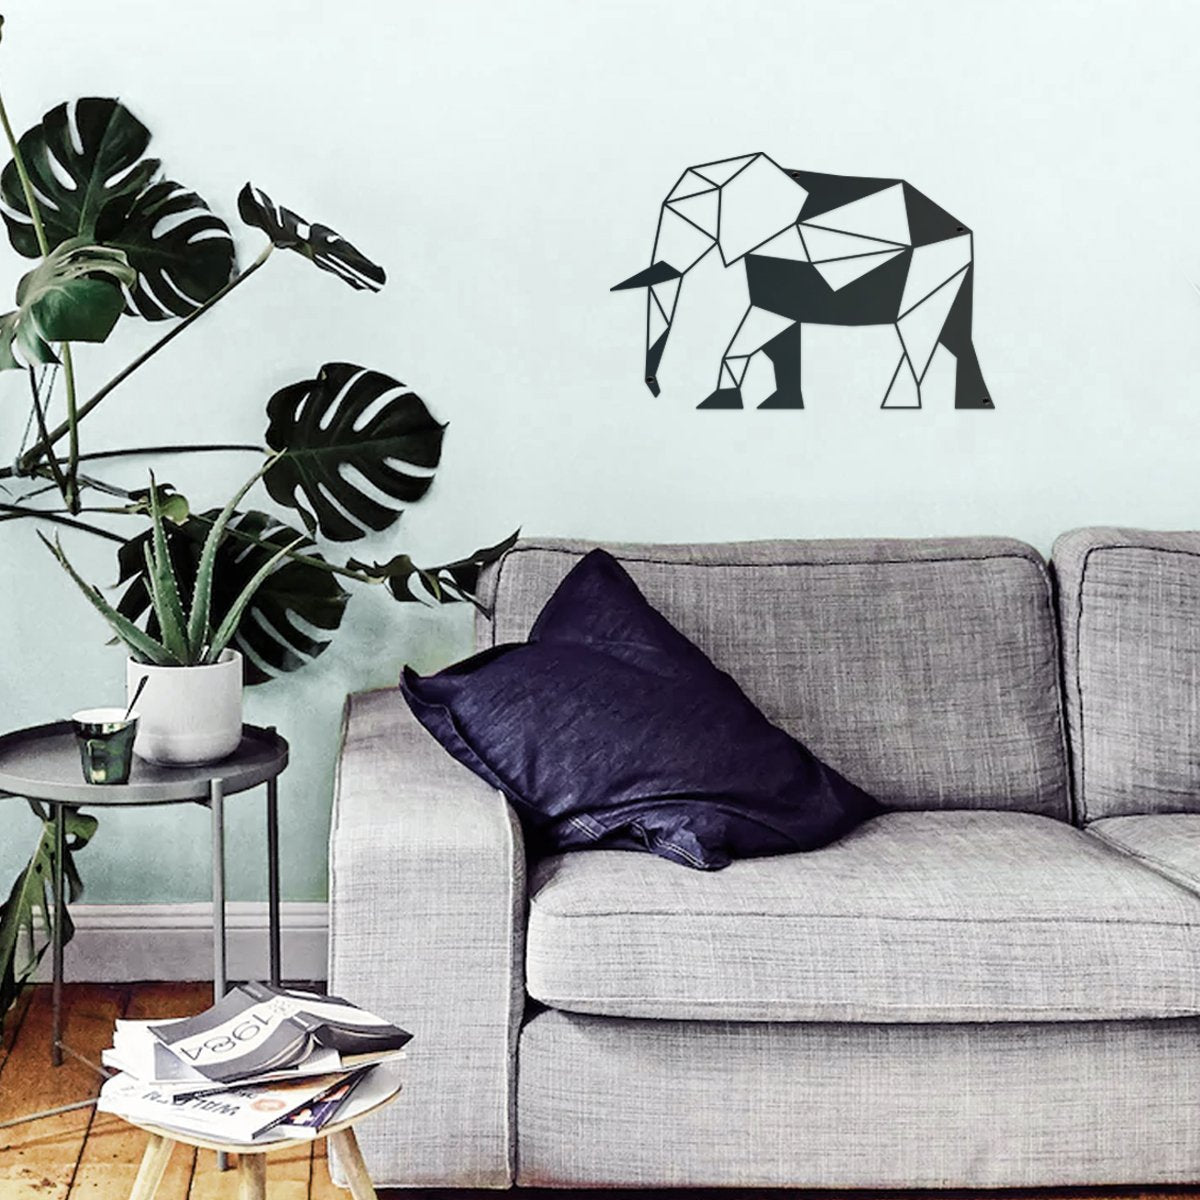 15 Simple Ideas to Make Wall Arts - Pretty Designs